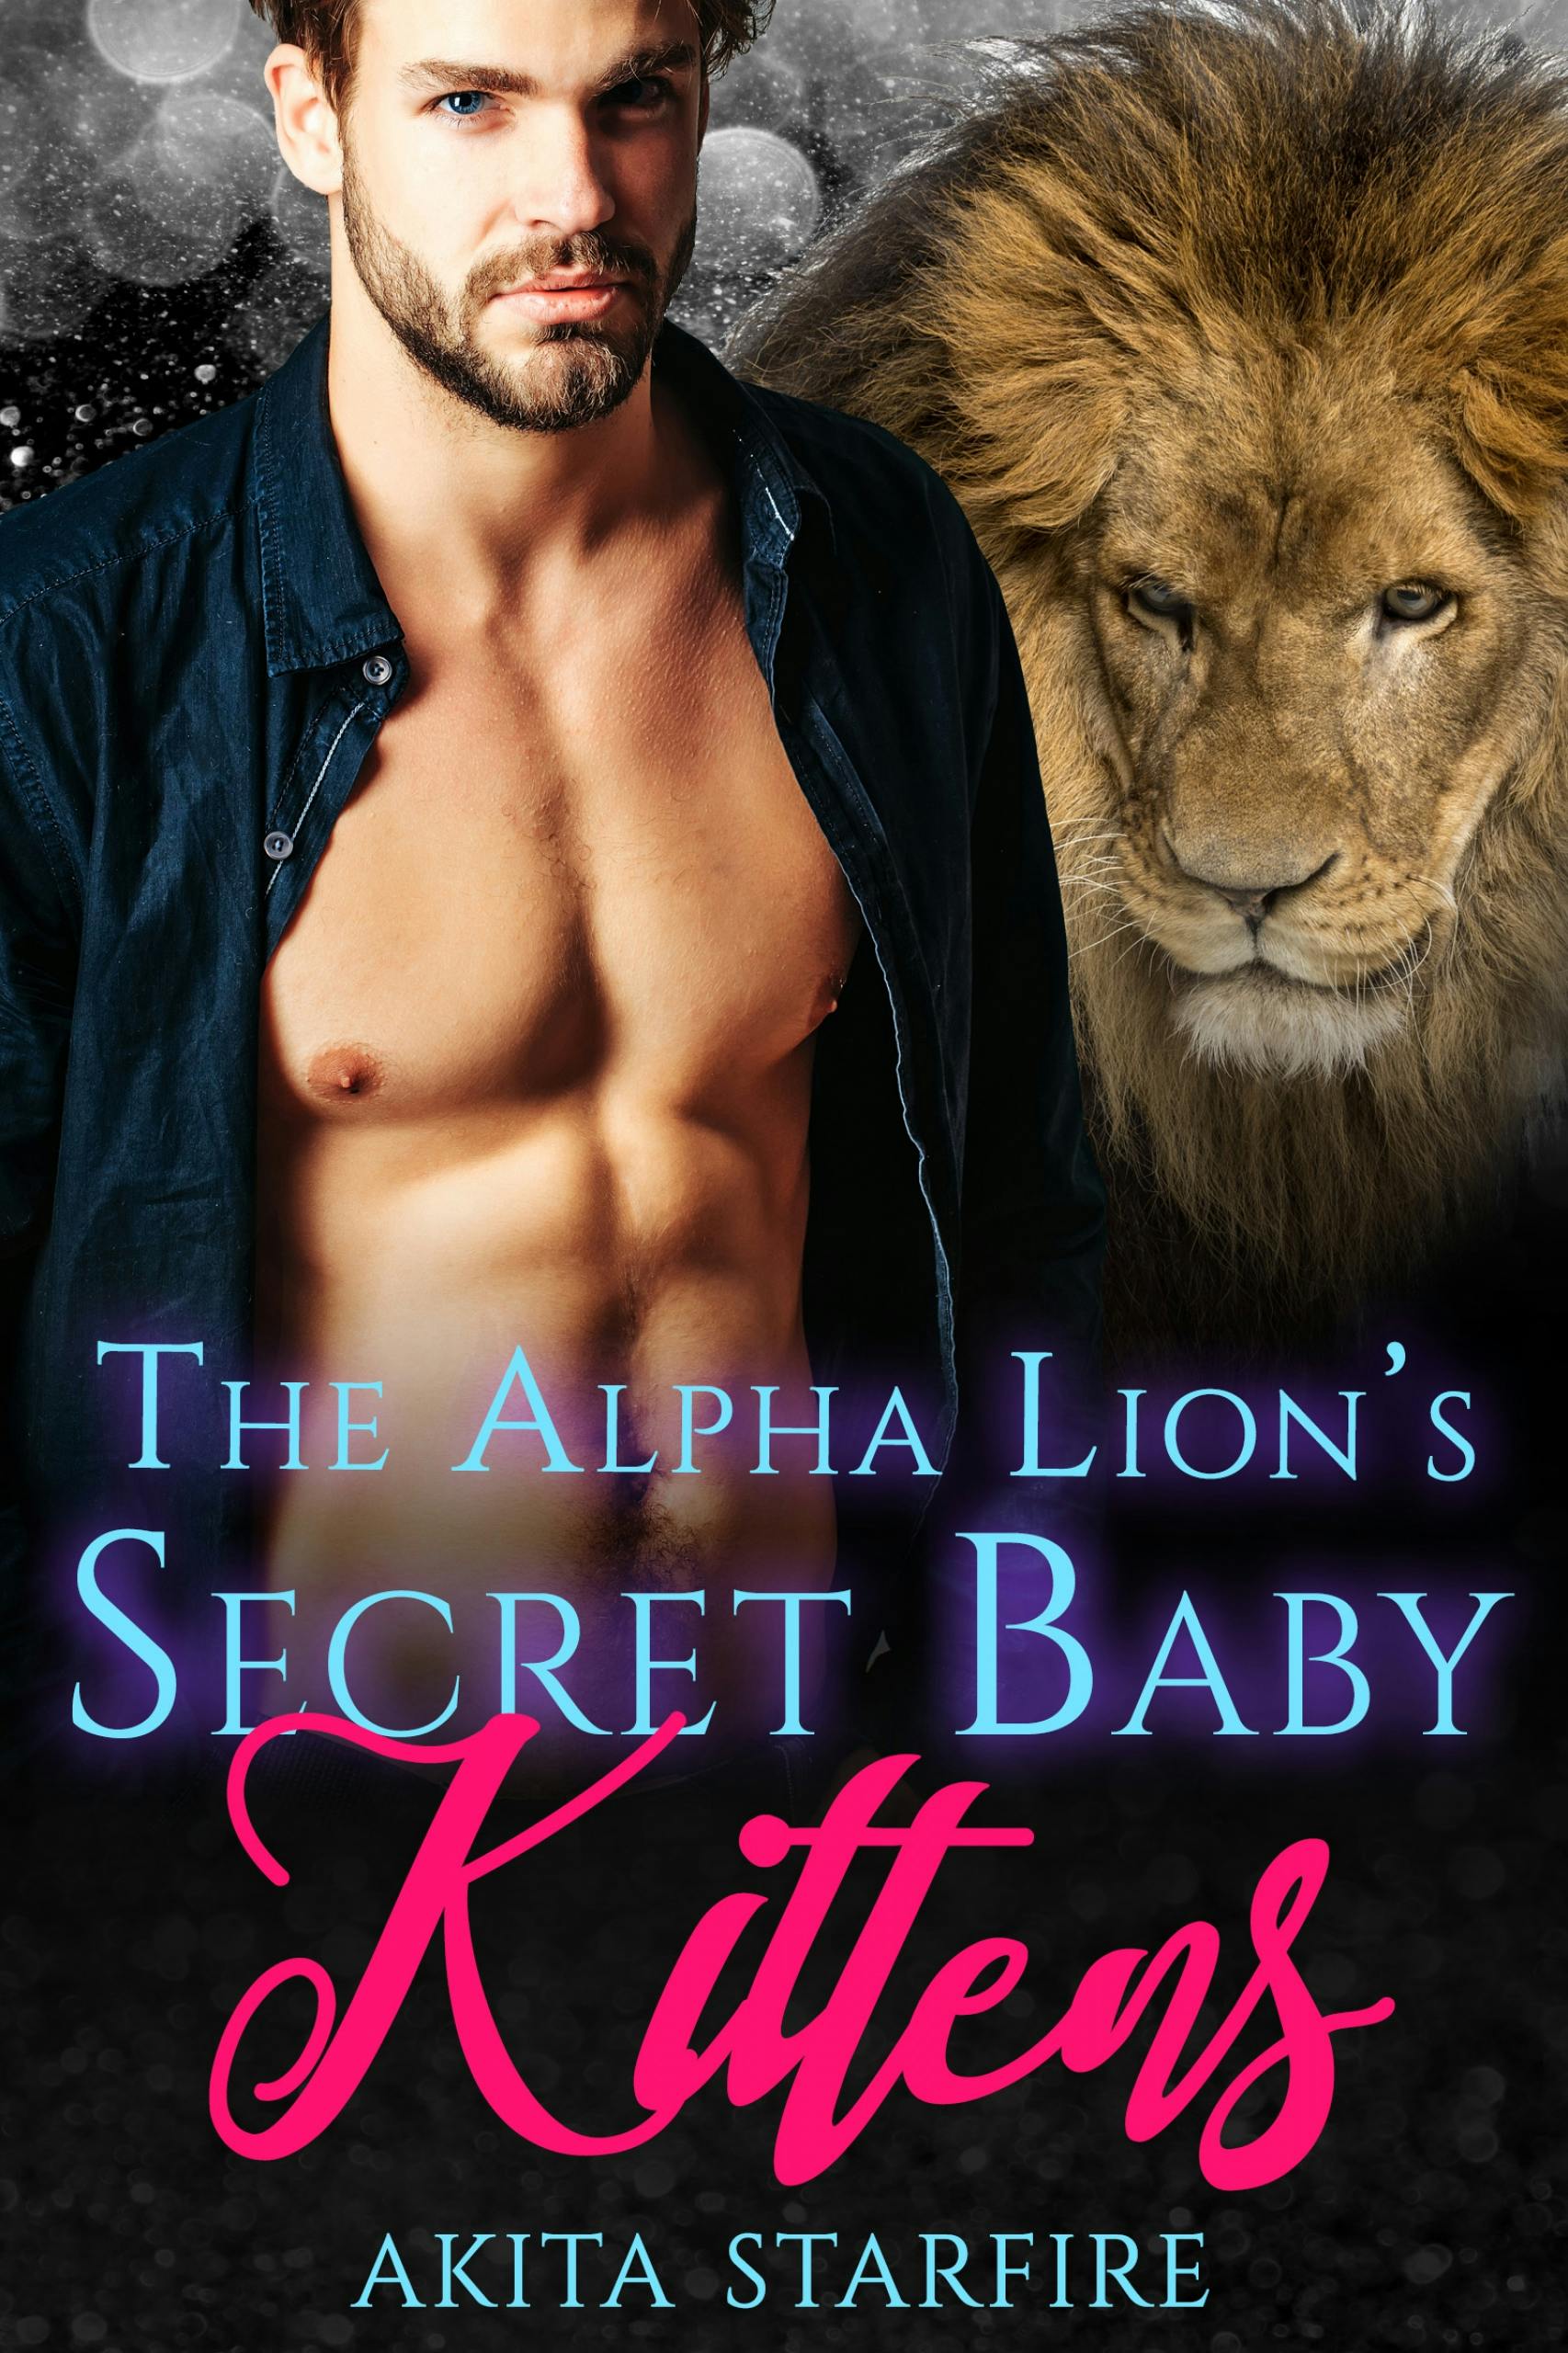 The Alpha Lion's Secret Baby Kittens - Akita StarFire